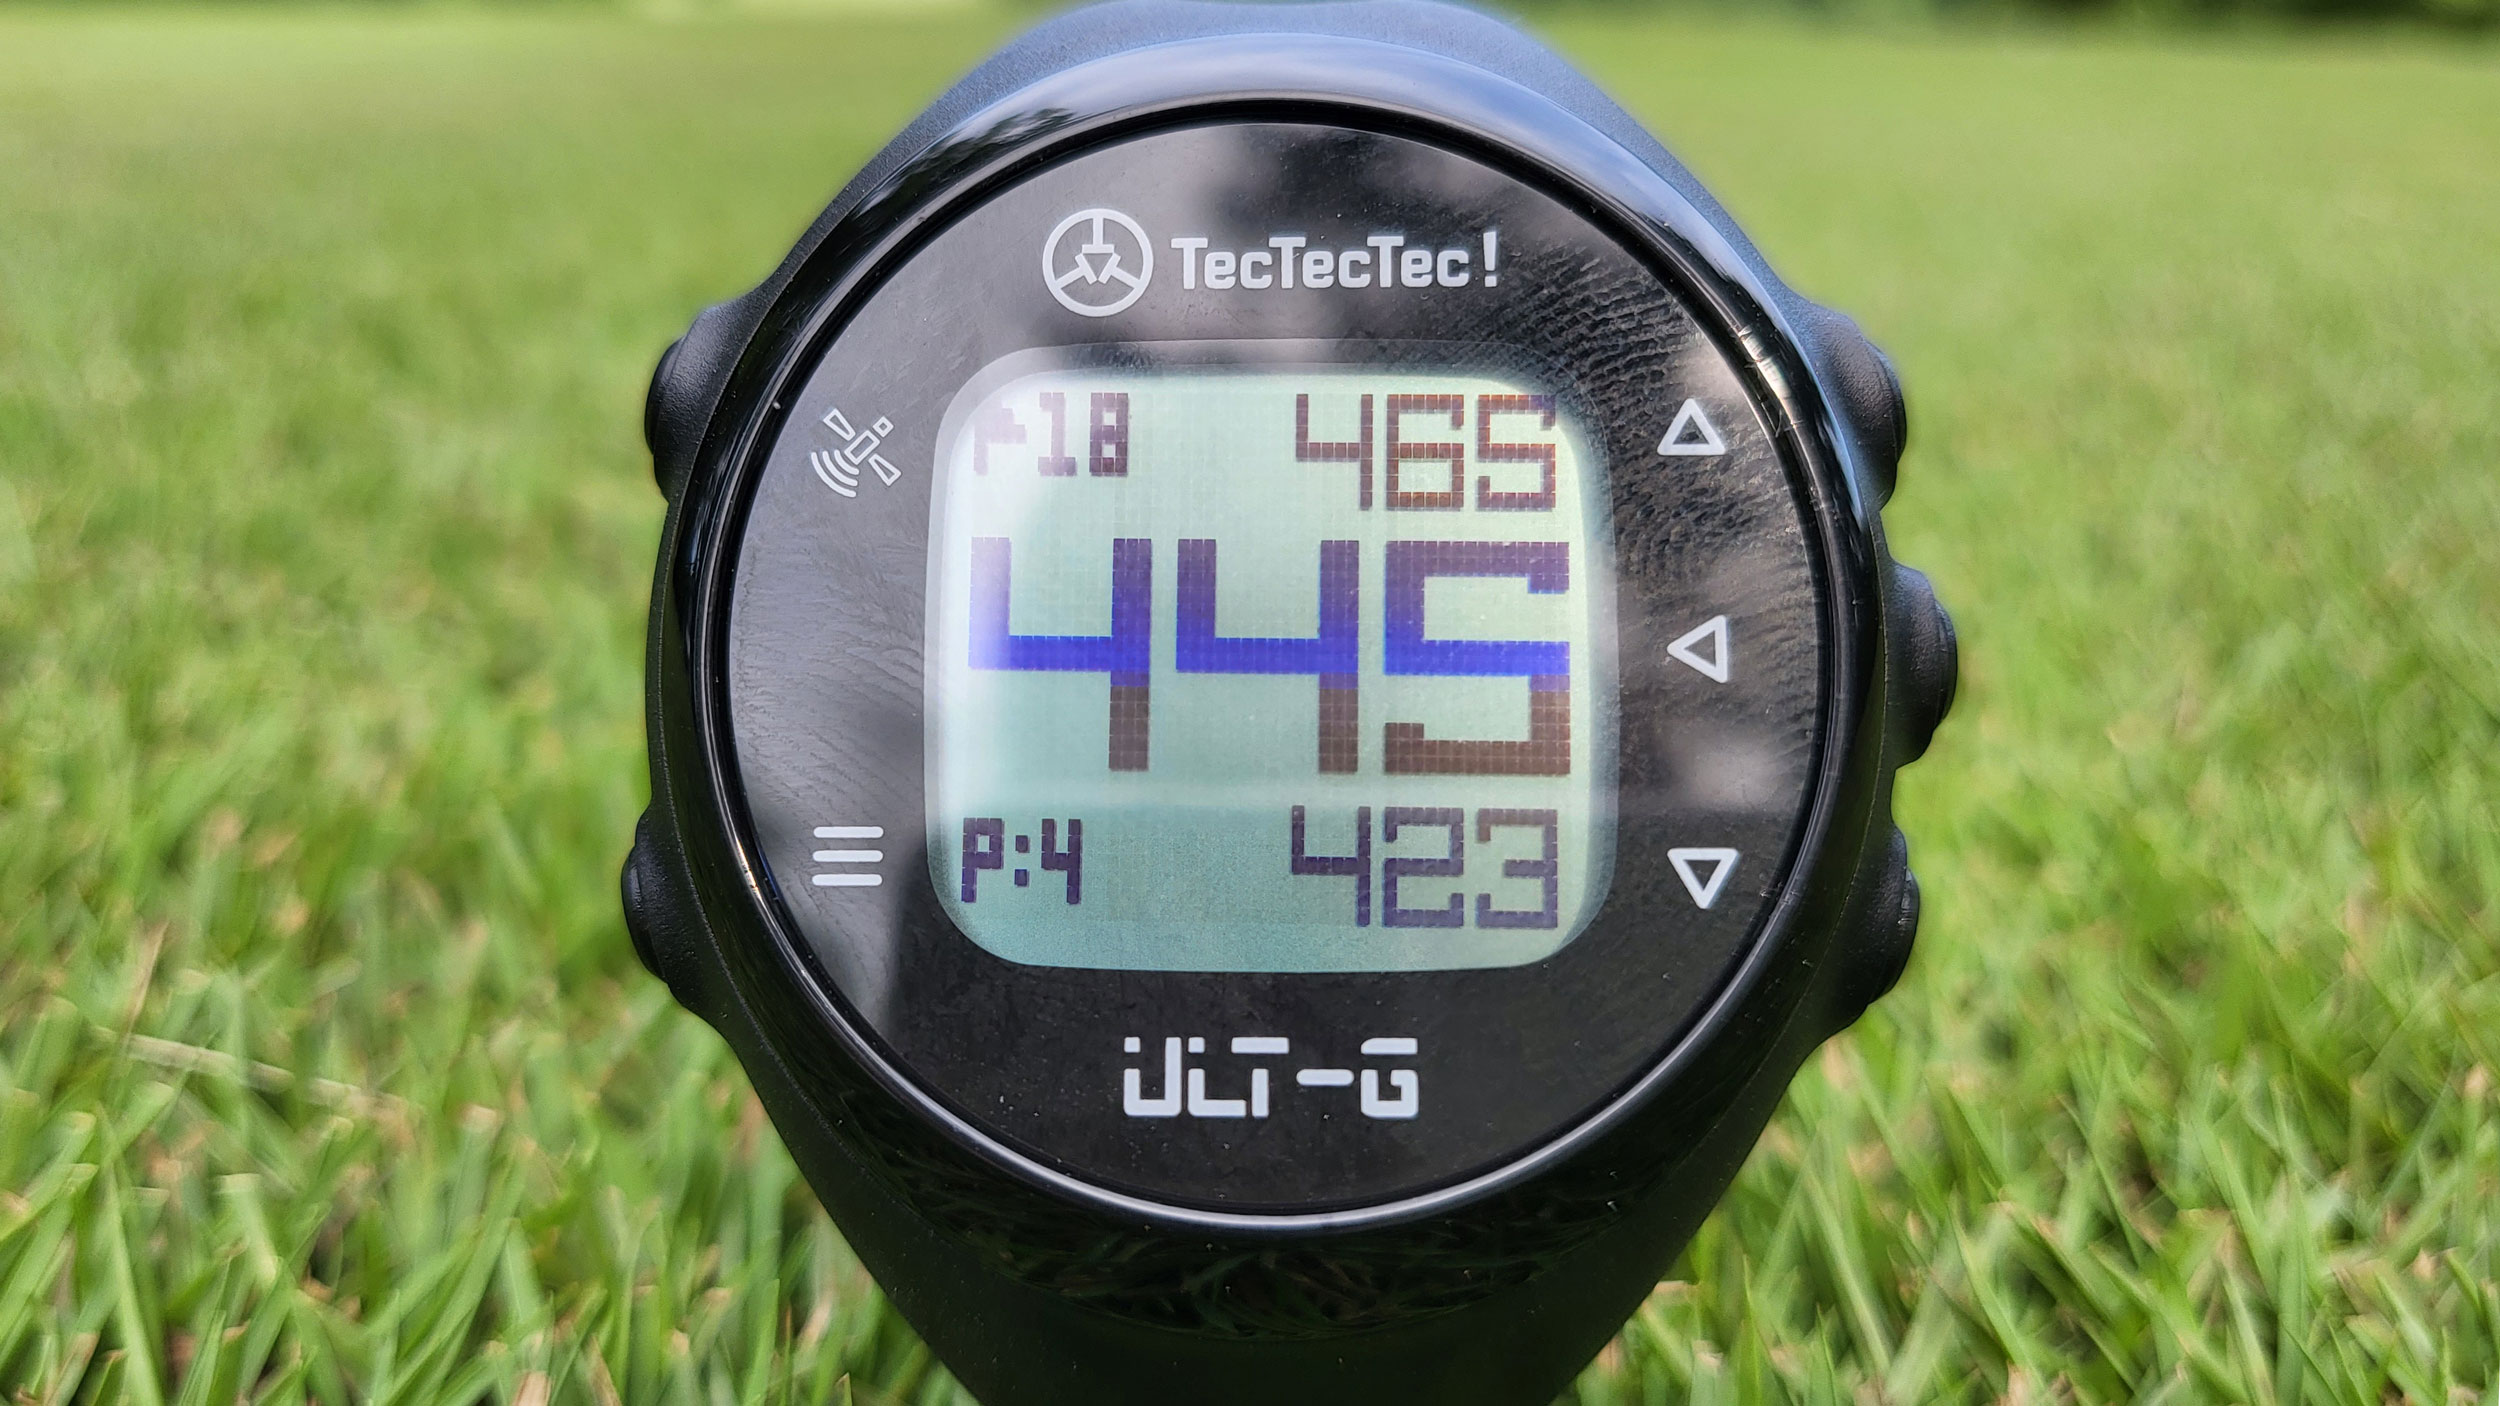 TecTecTec ULT-G GPS Watch Review | Golf Monthly